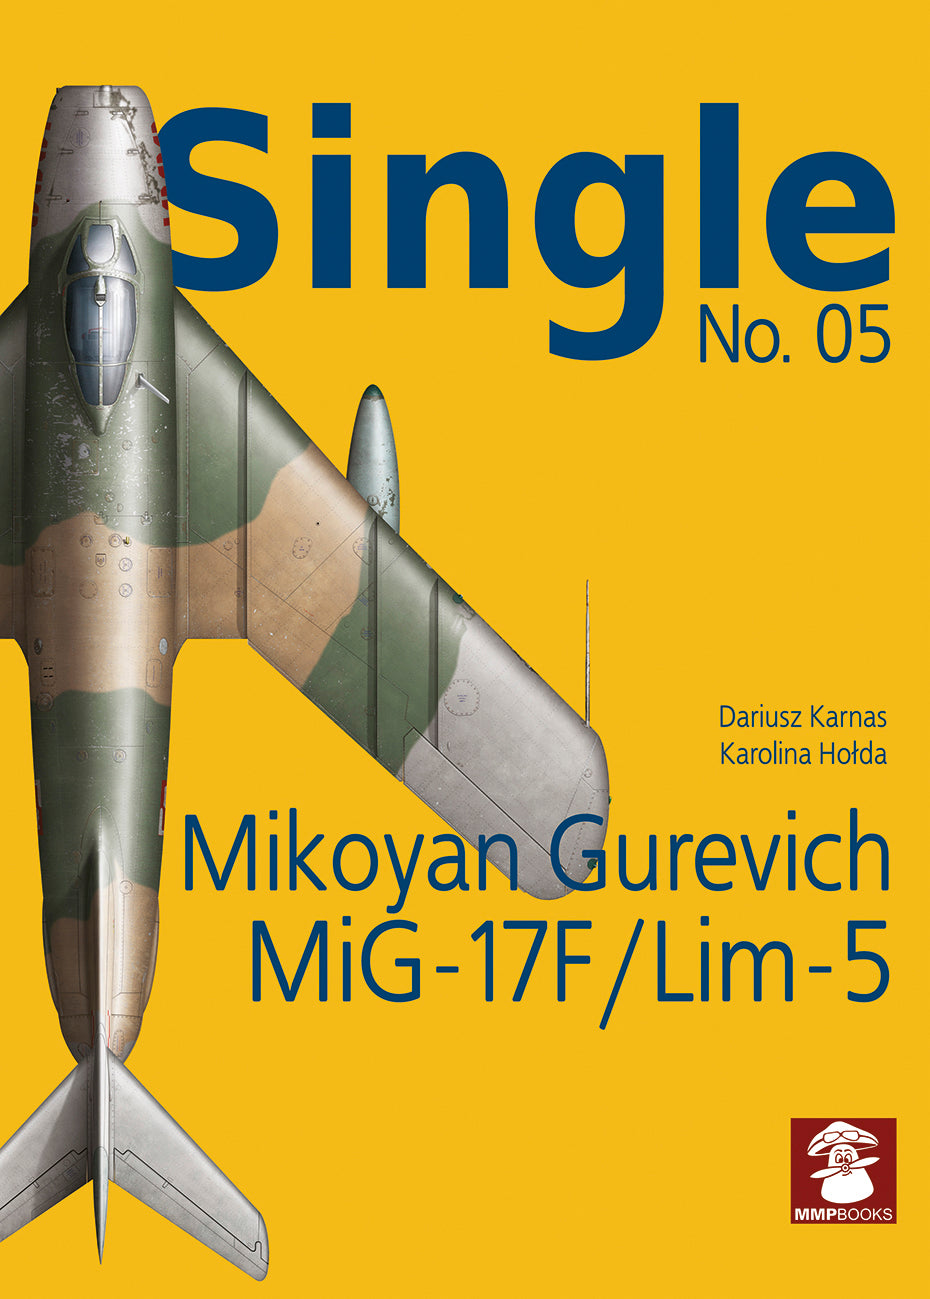 Mikoyan Gurevich MiG-17F / Lim-5